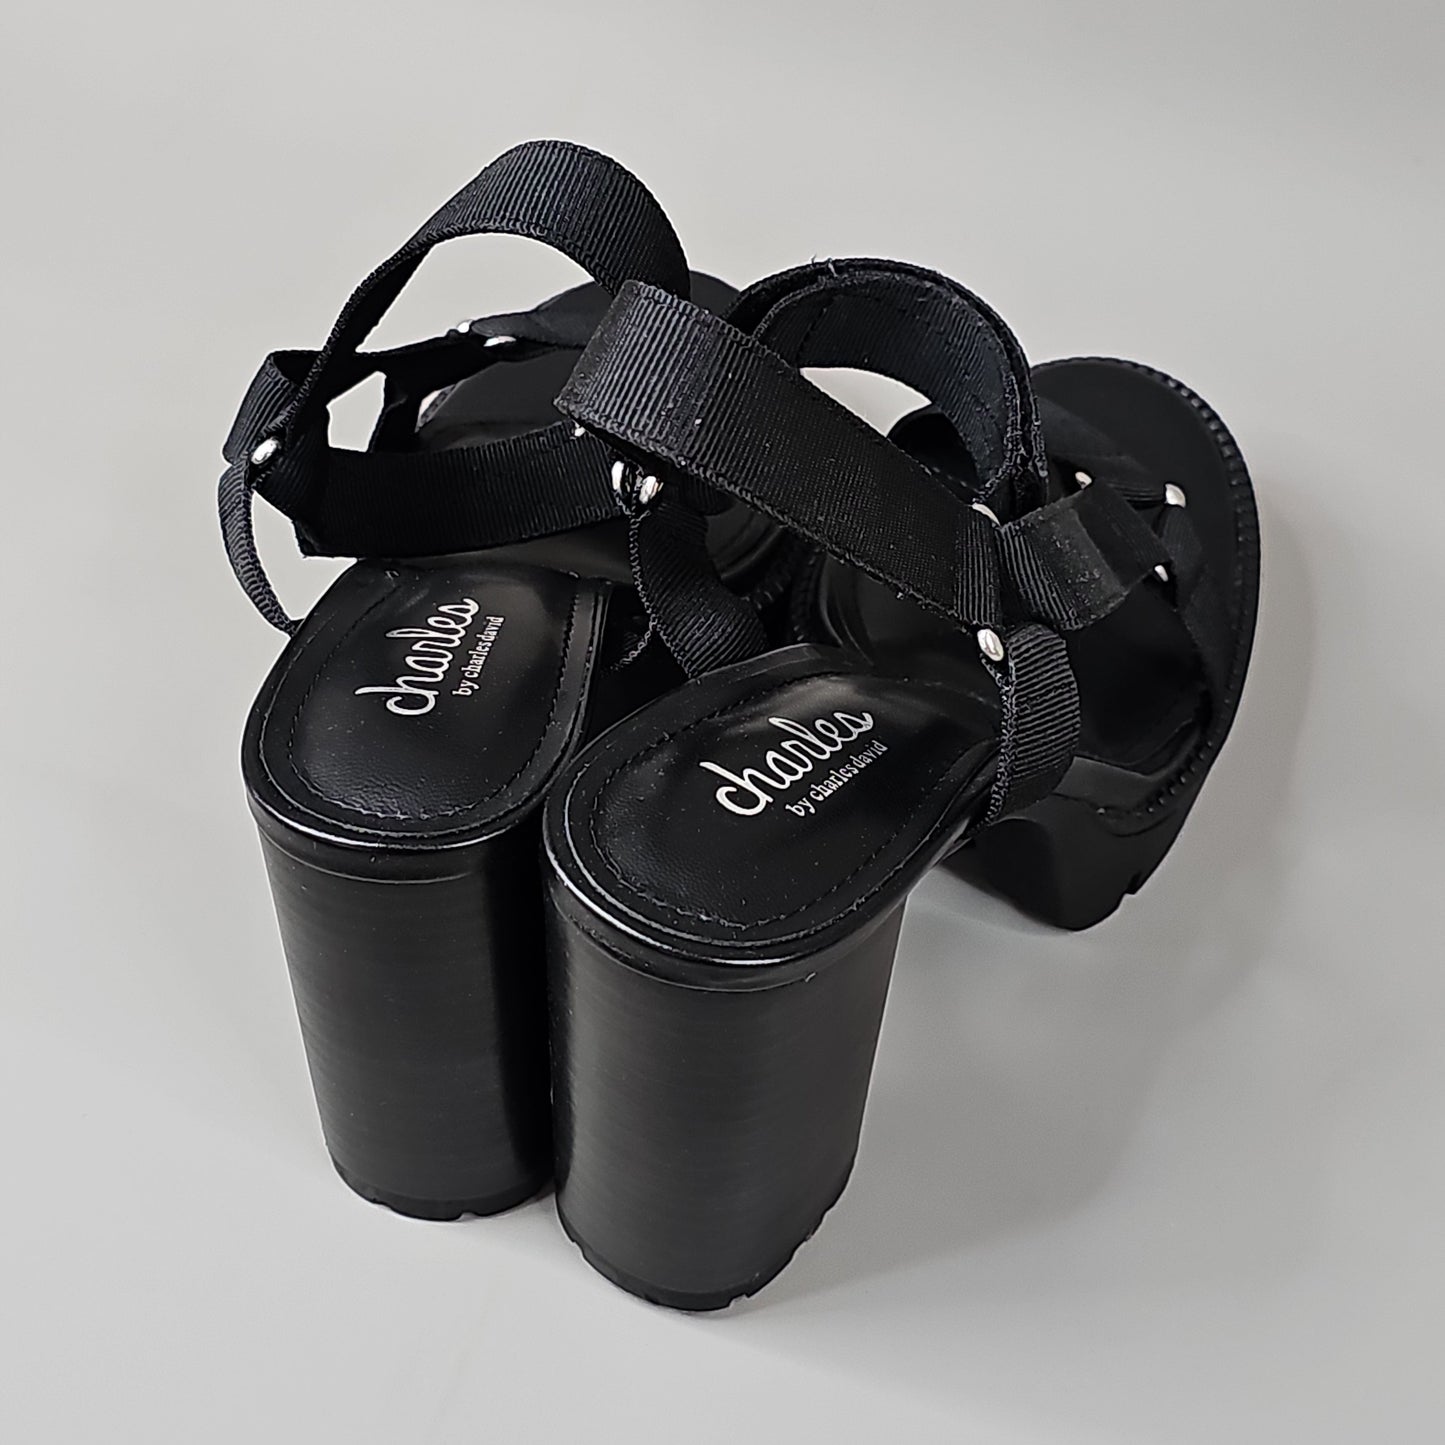 CHARLES BY CHARLES DAVID Women's Vast Sport Sandal Shoe Sz 5.5 M Black (New)